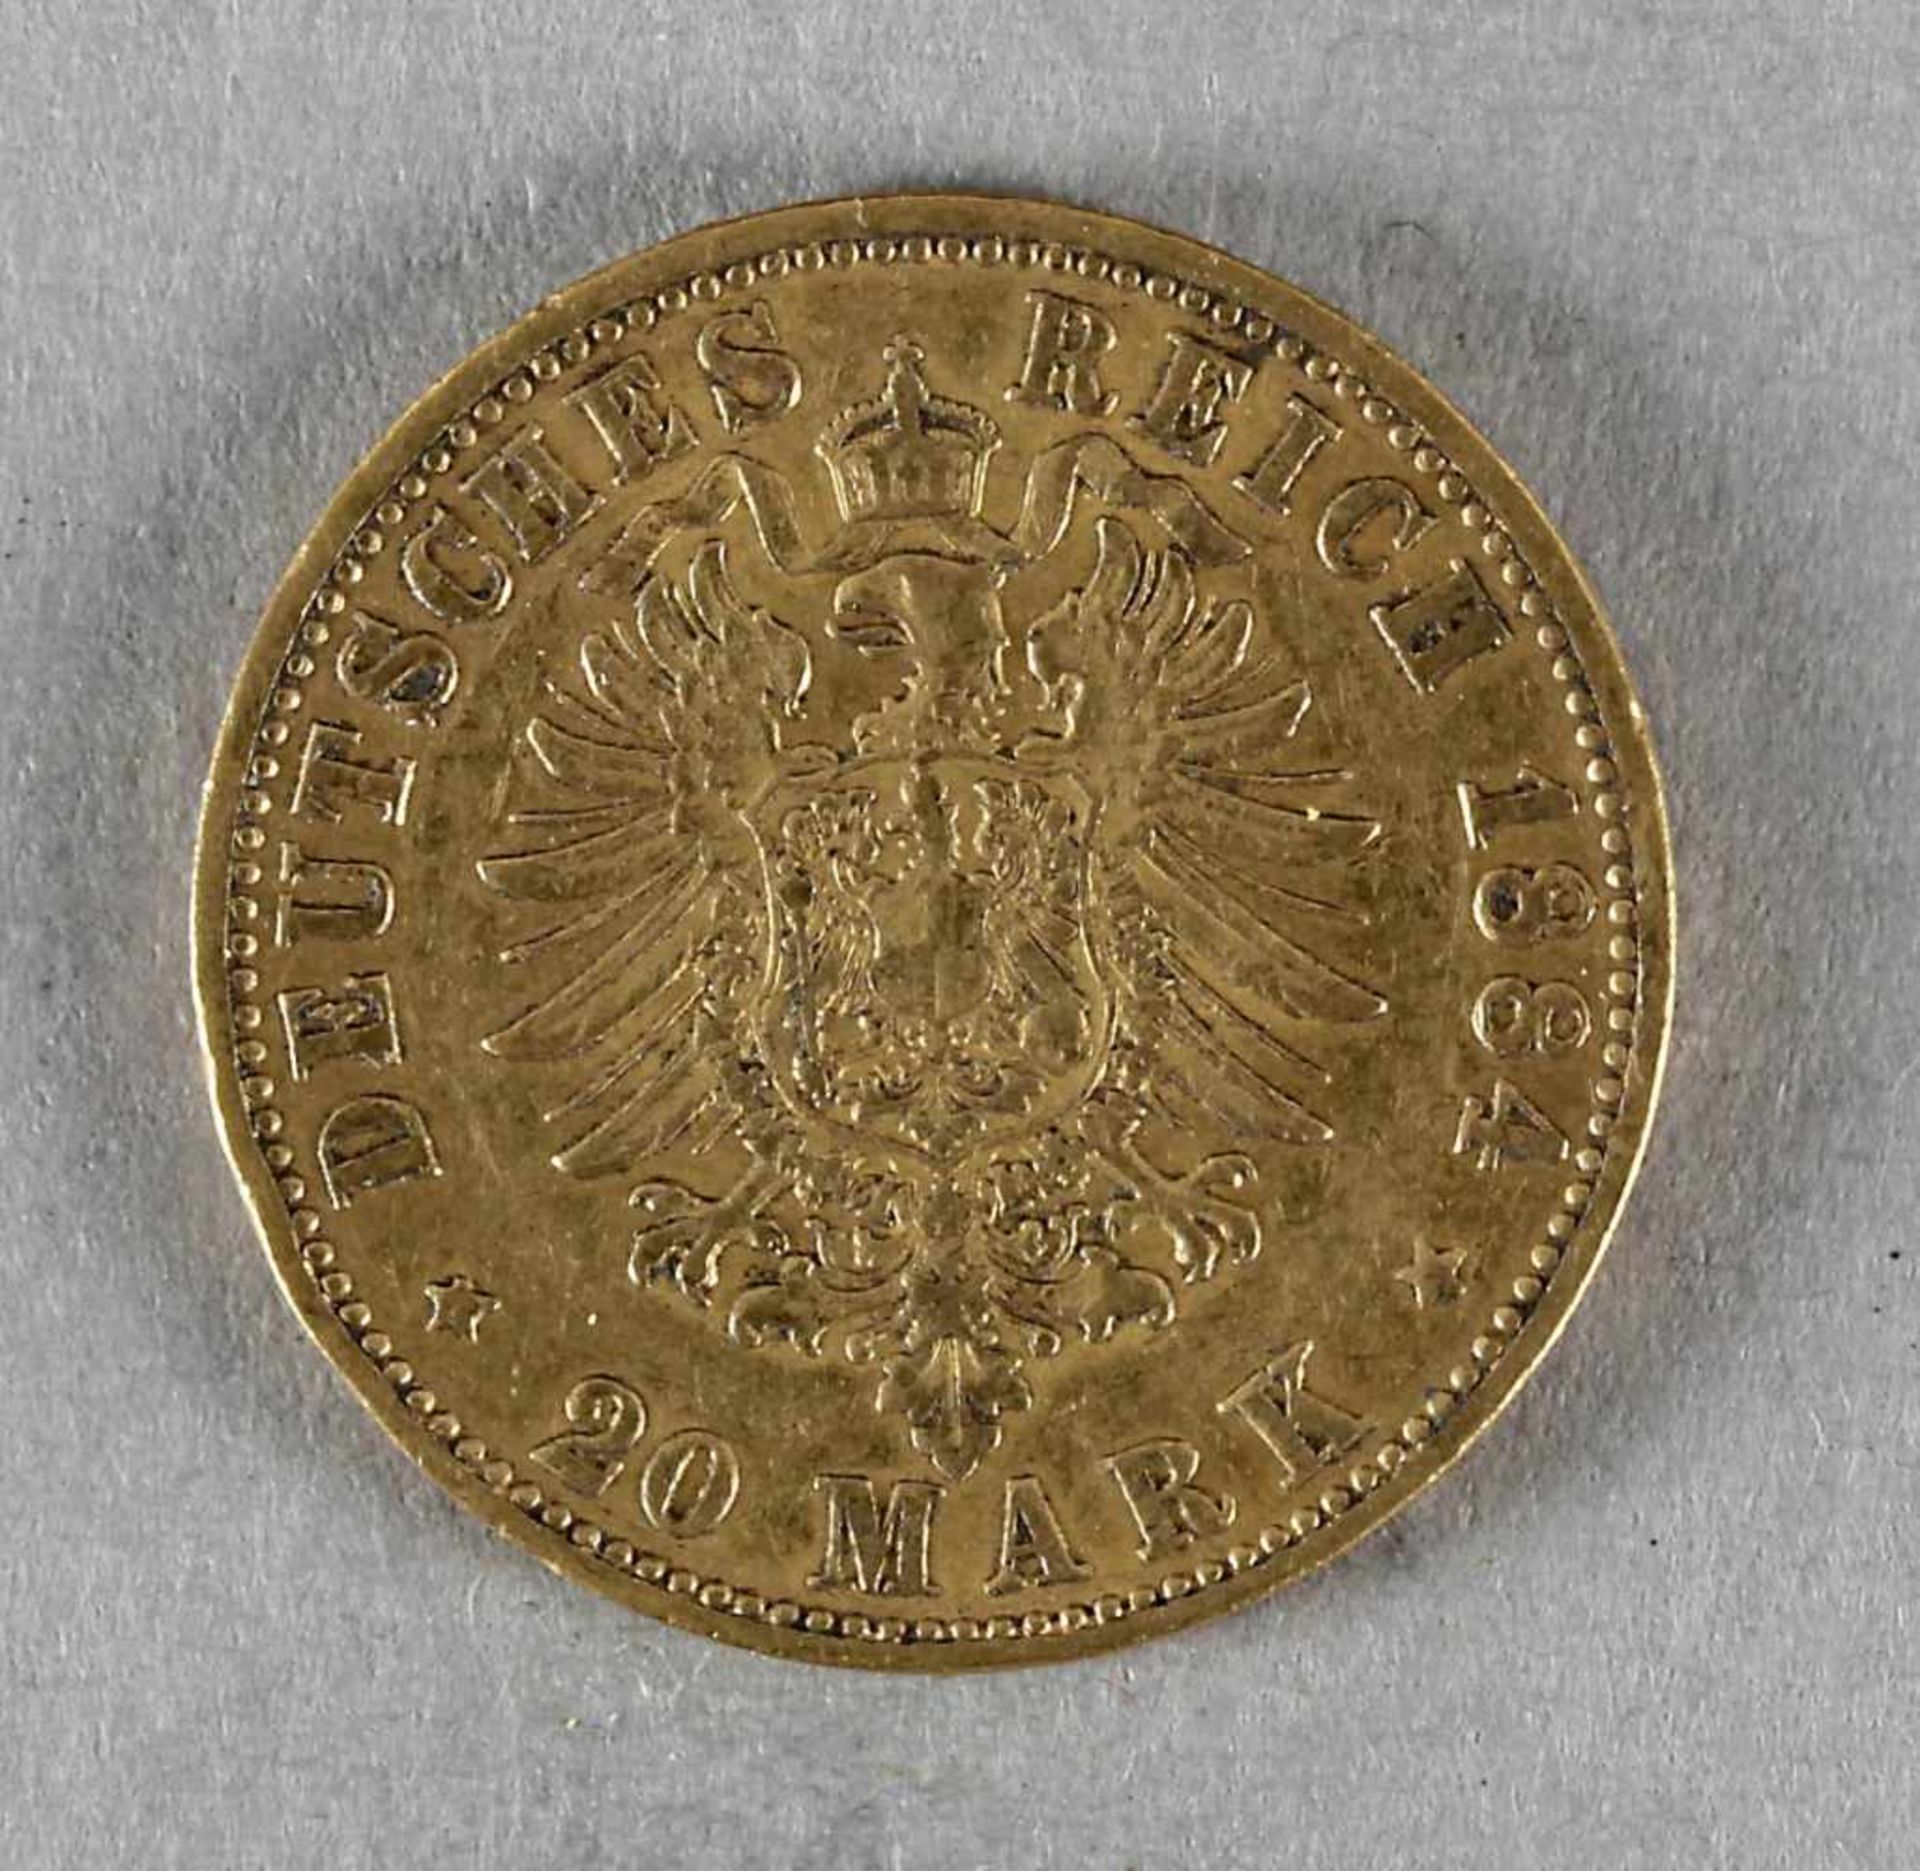 Goldmünze, 20 Mark, Hamburg, 1884 J - Image 2 of 2